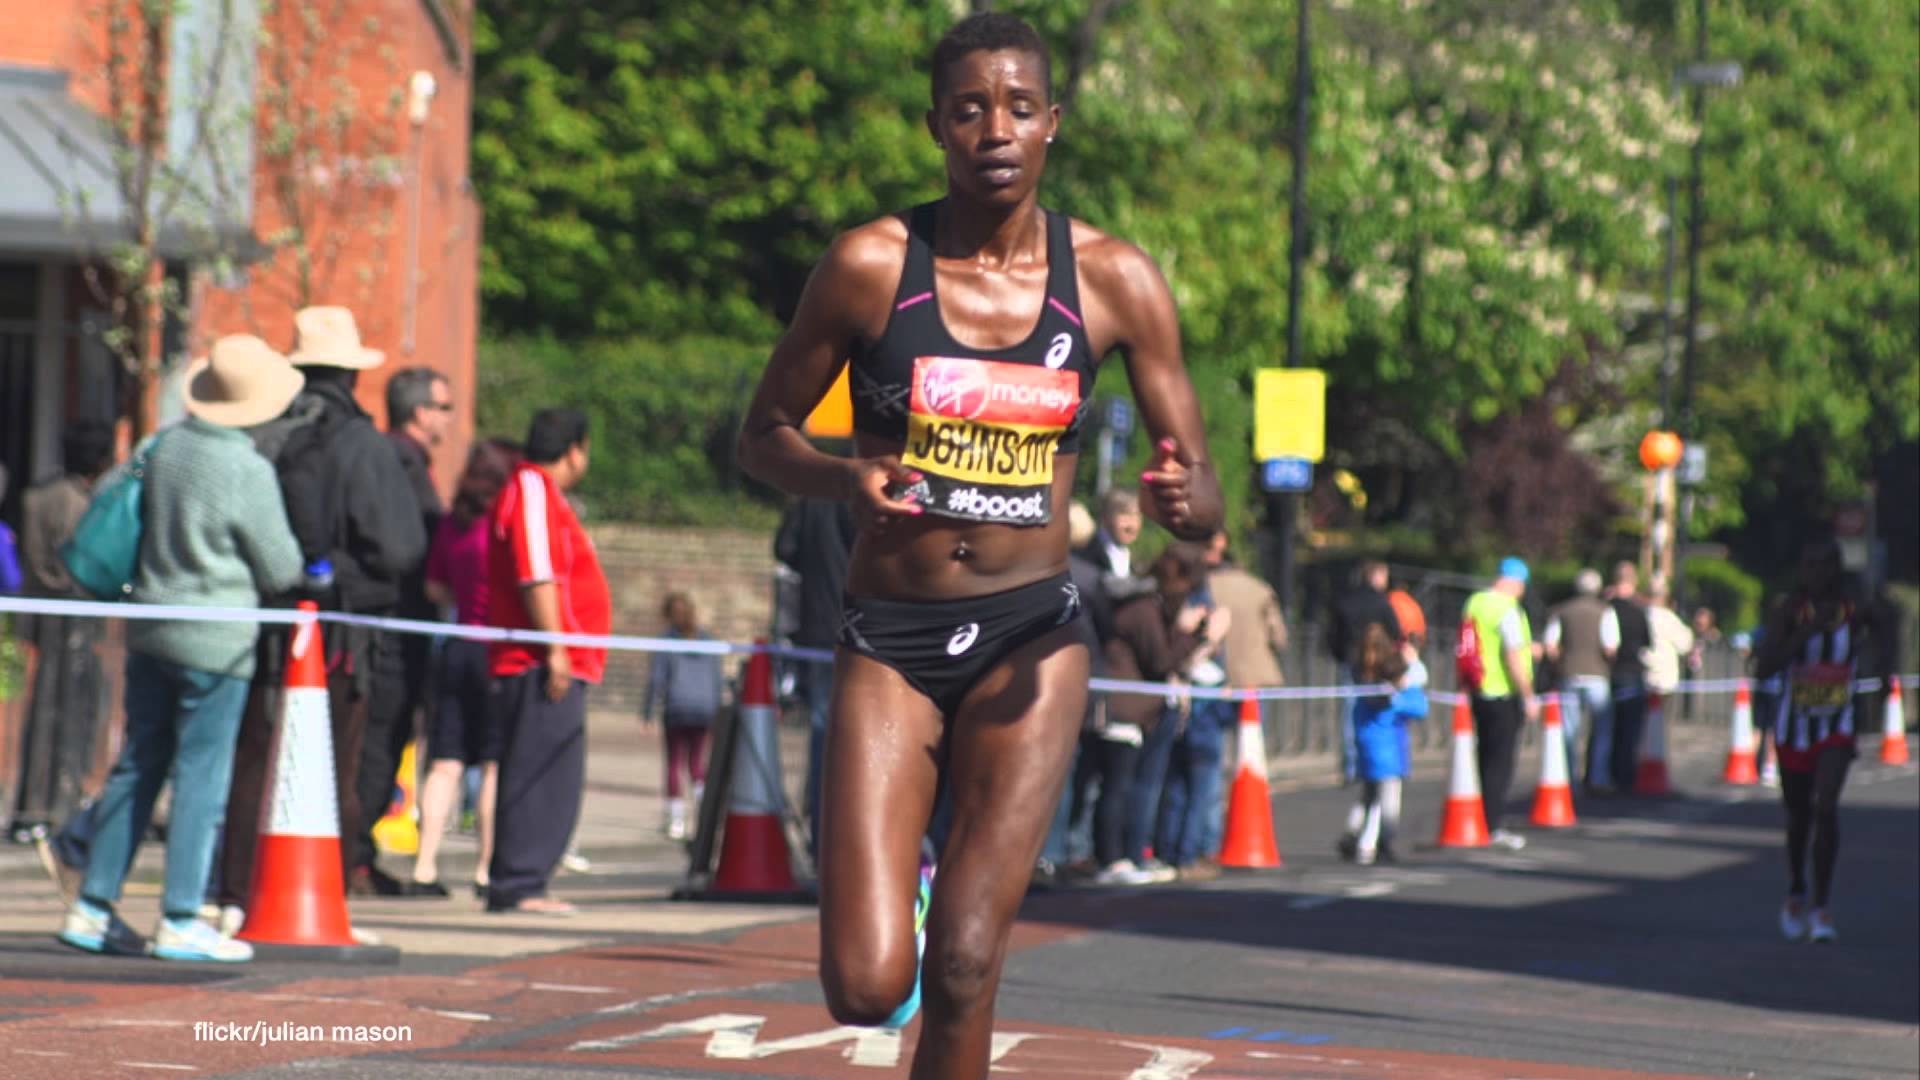 Three-time Olympian Diane Nukuri is the favorite at Freihofer's Run for Women